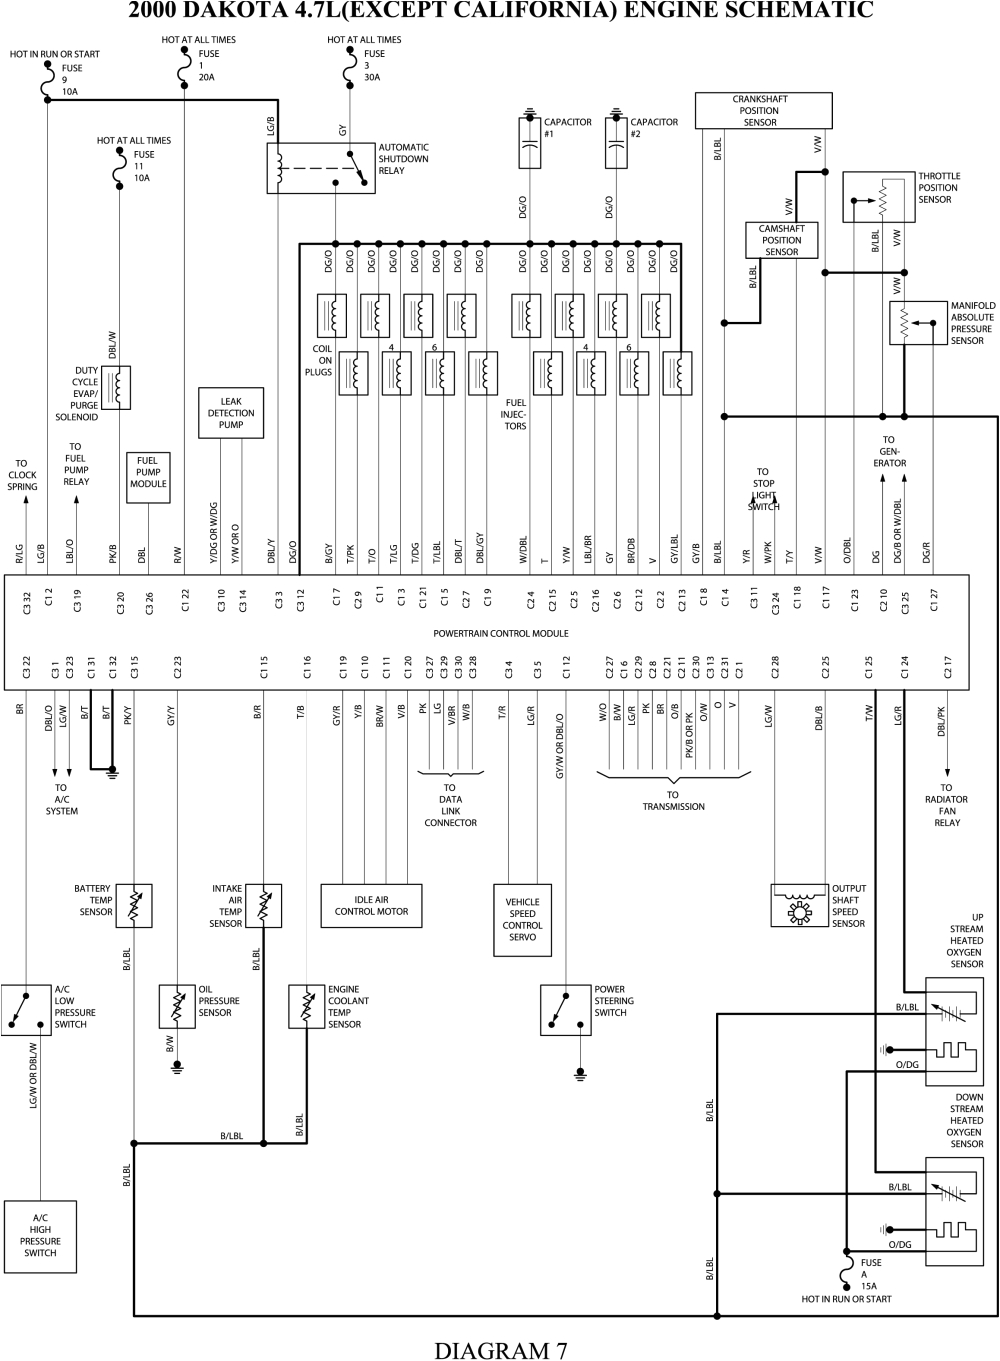 2002 dodge ram wiring diagram 2005 gmc sierra headlight wiring diagram plete wiring diagrams u2022 rh oldorchardfarm co 2004 gmc fuse box diagrams 2005 gmc